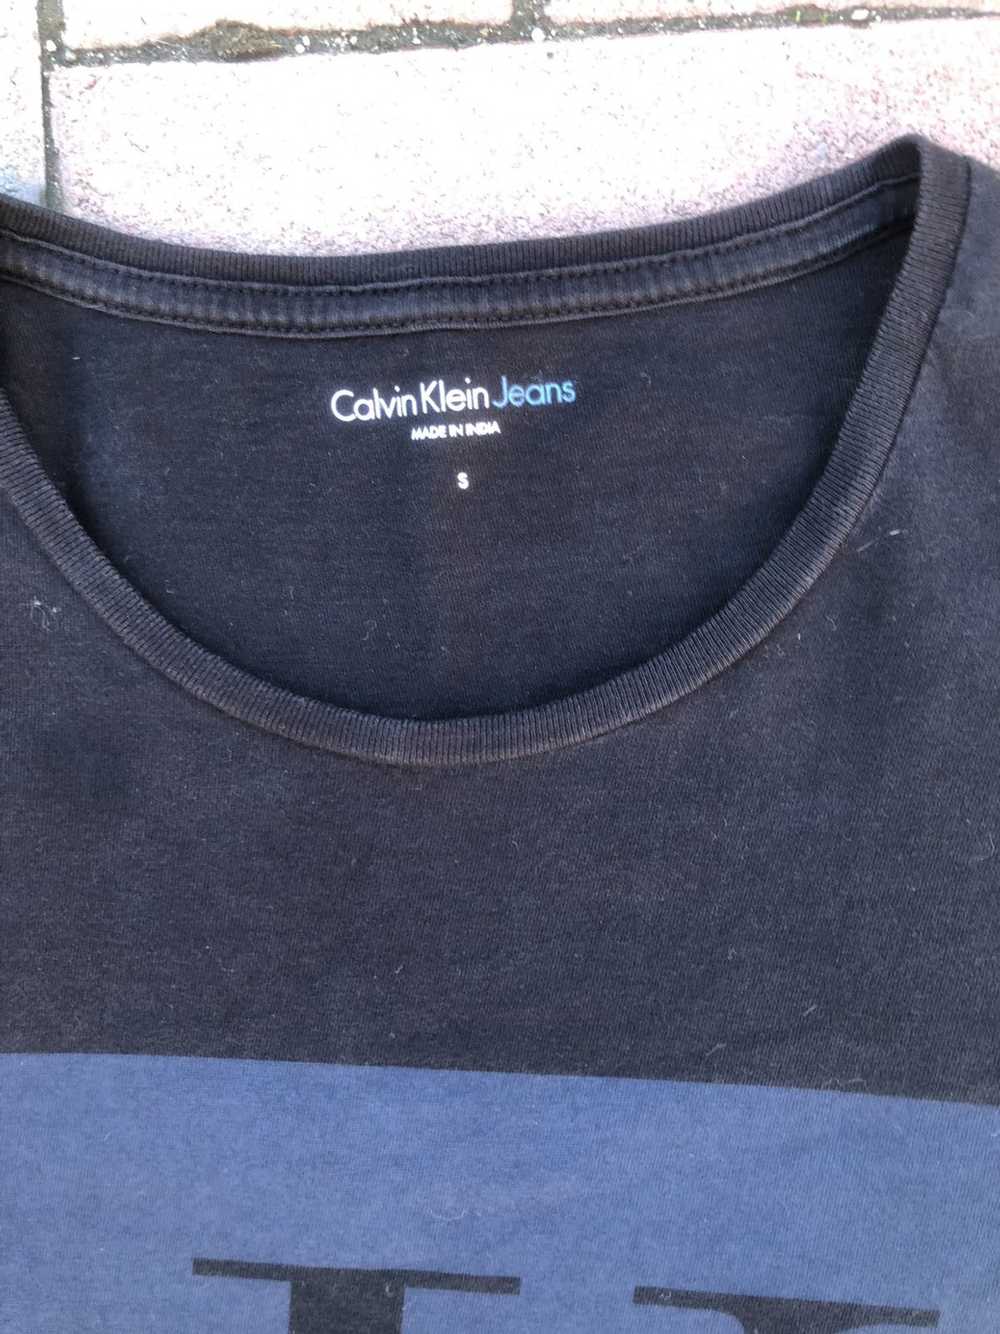 Calvin Klein Calvin Klein Jeans Black tee - image 7